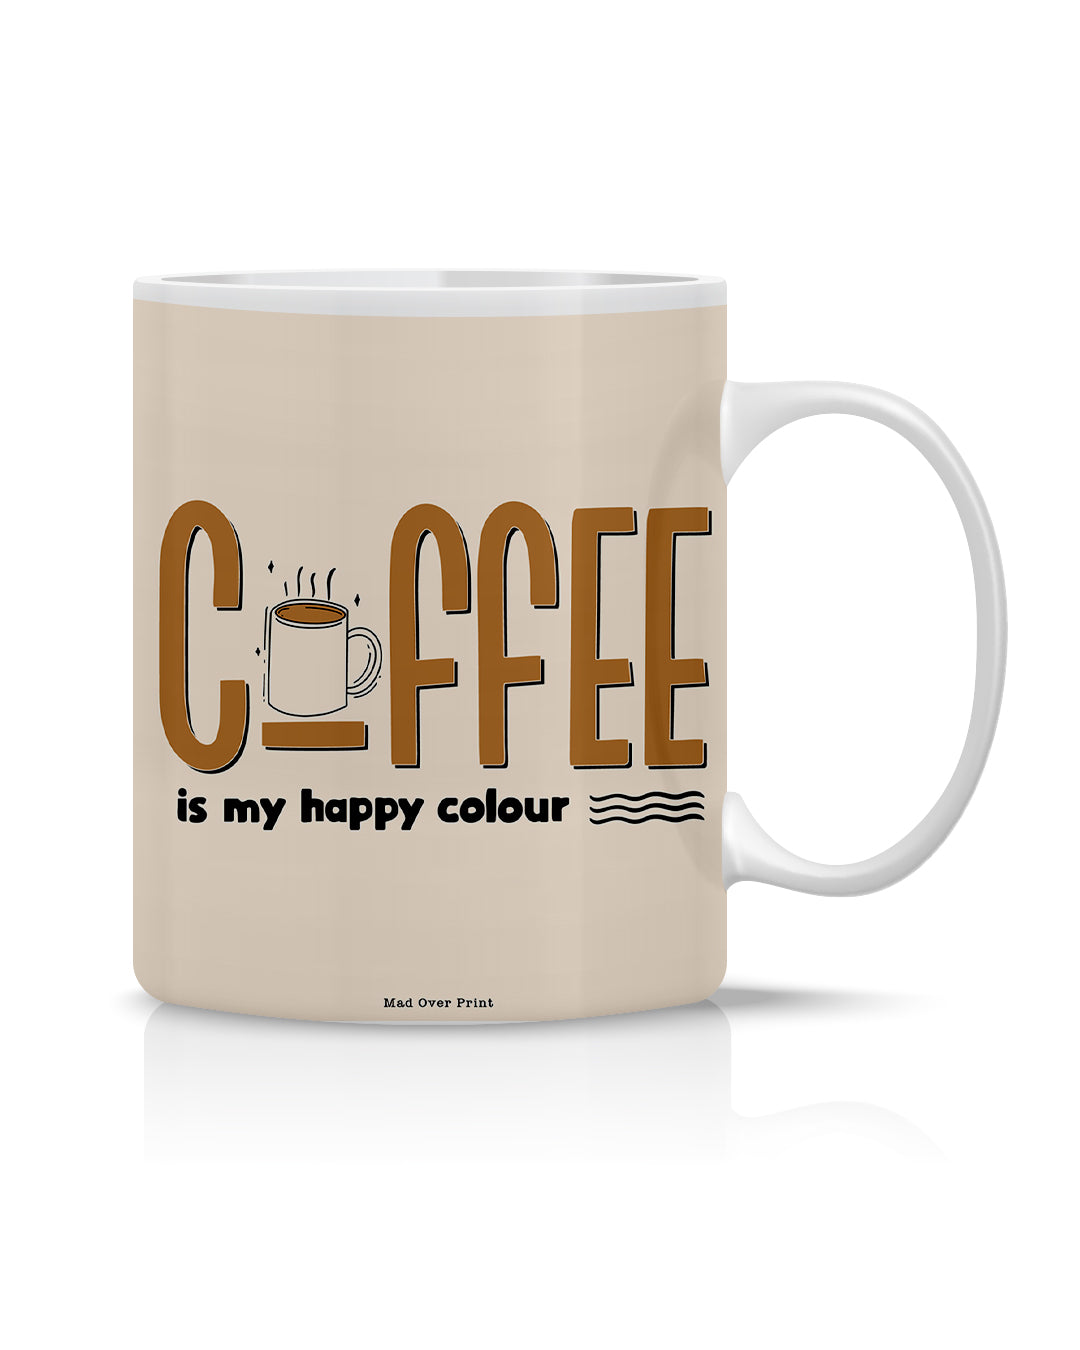 Happy-colour Mug